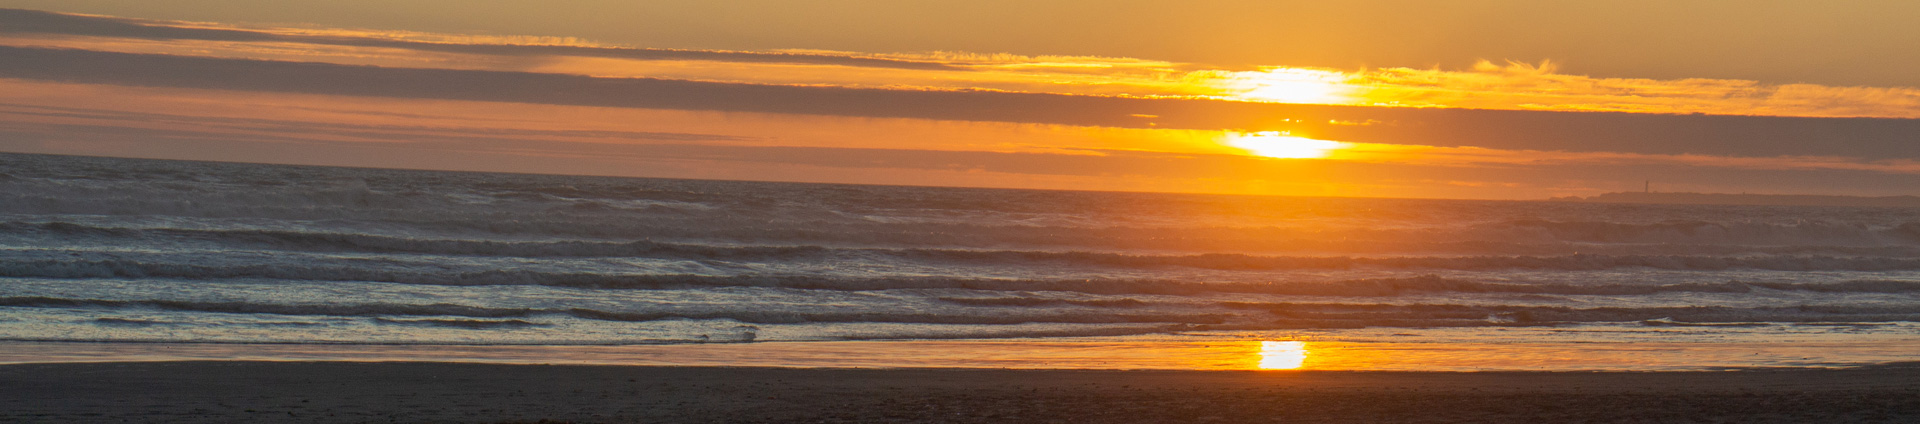 header image of sunset on pacific coast